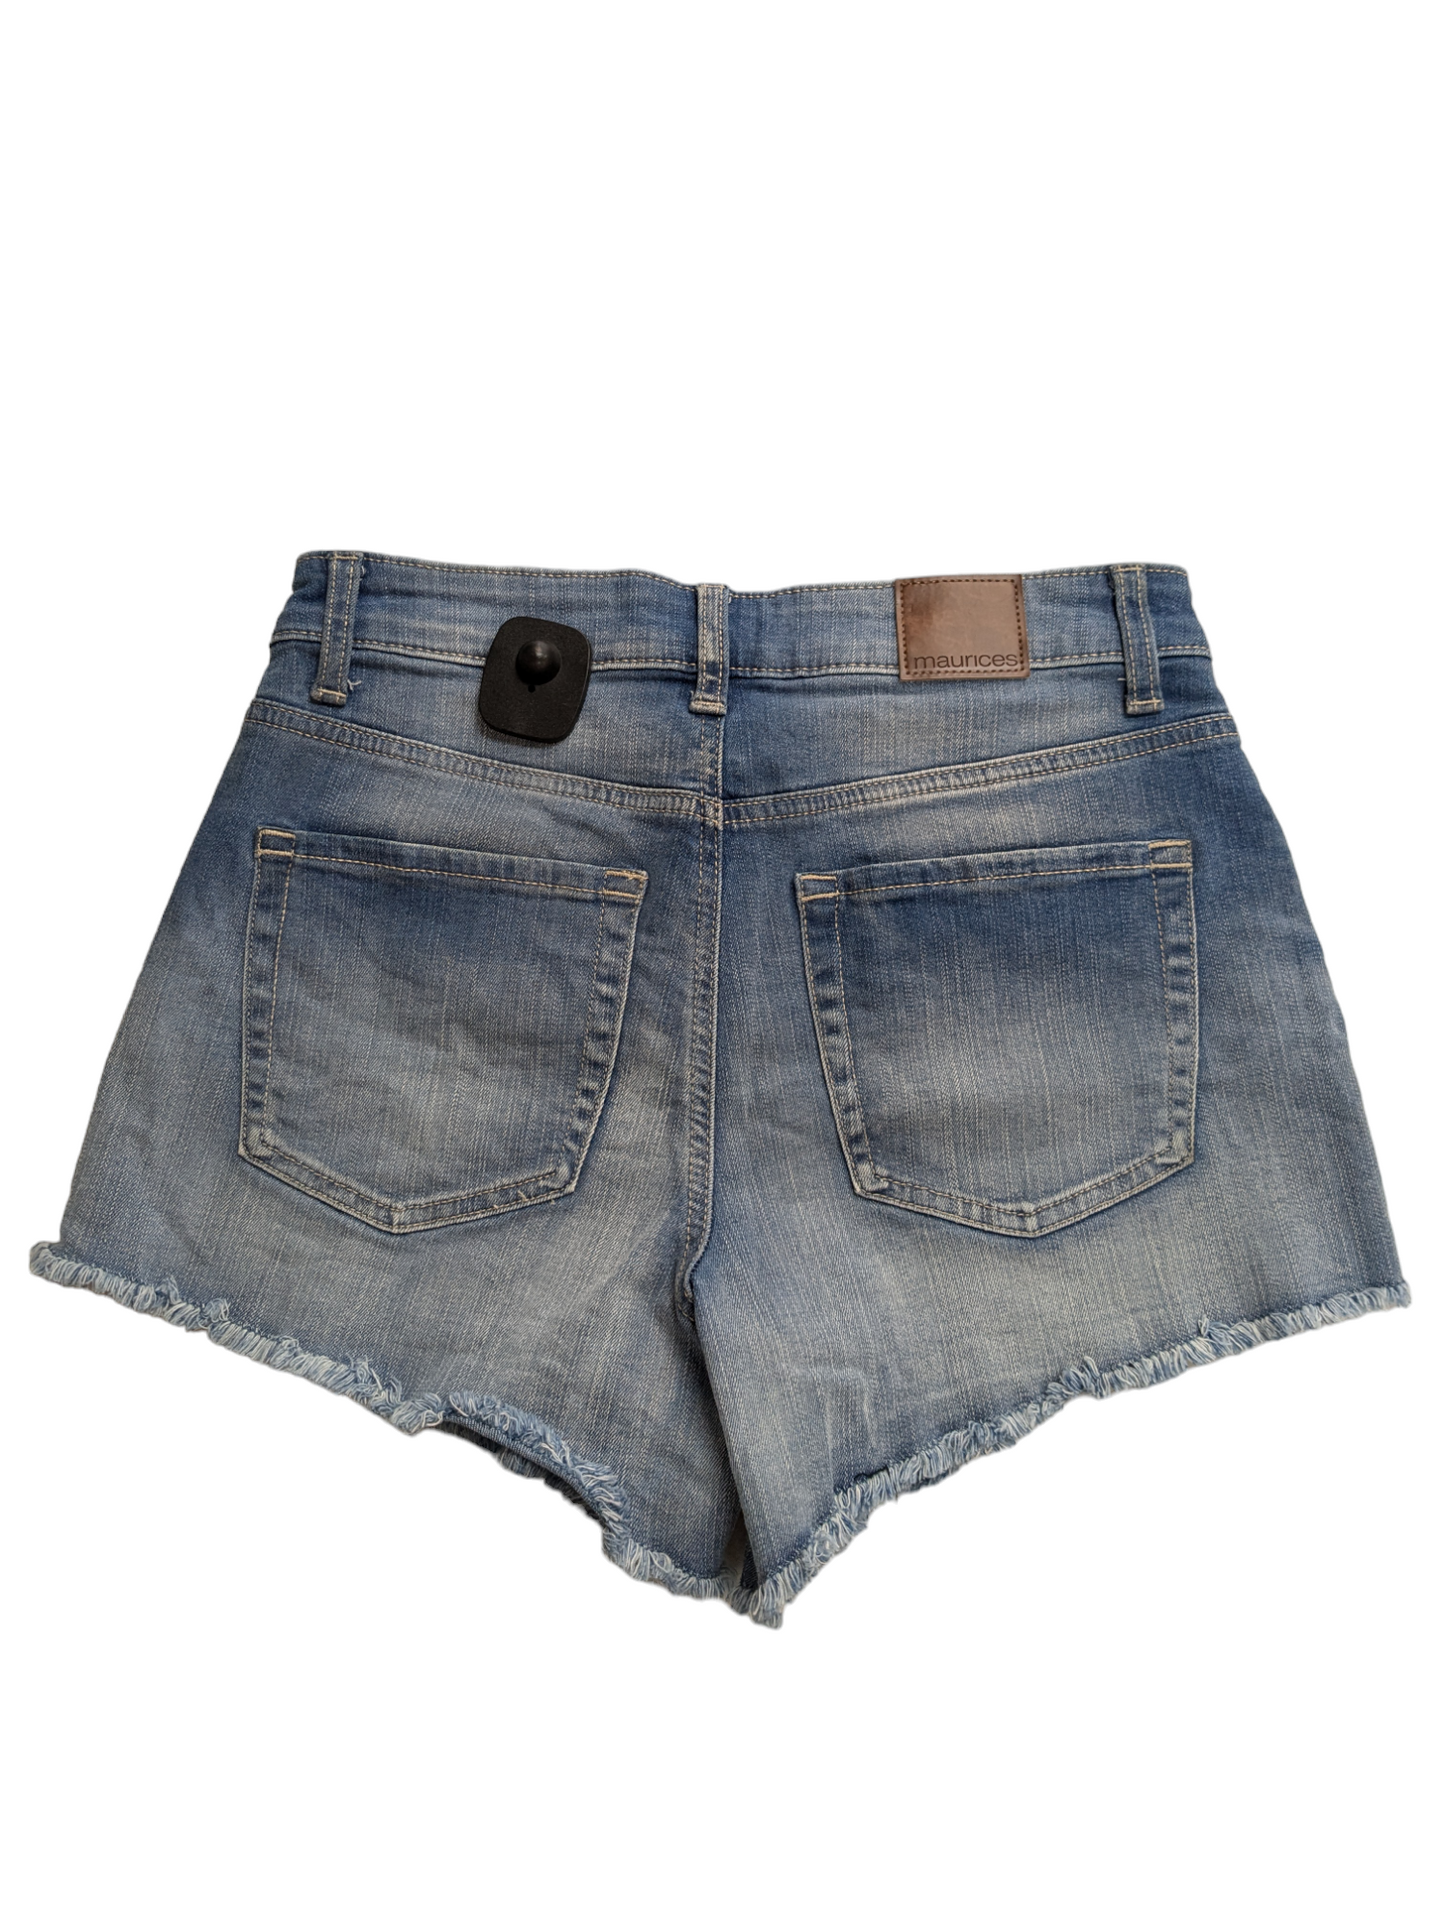 Blue Denim Shorts Maurices, Size 4